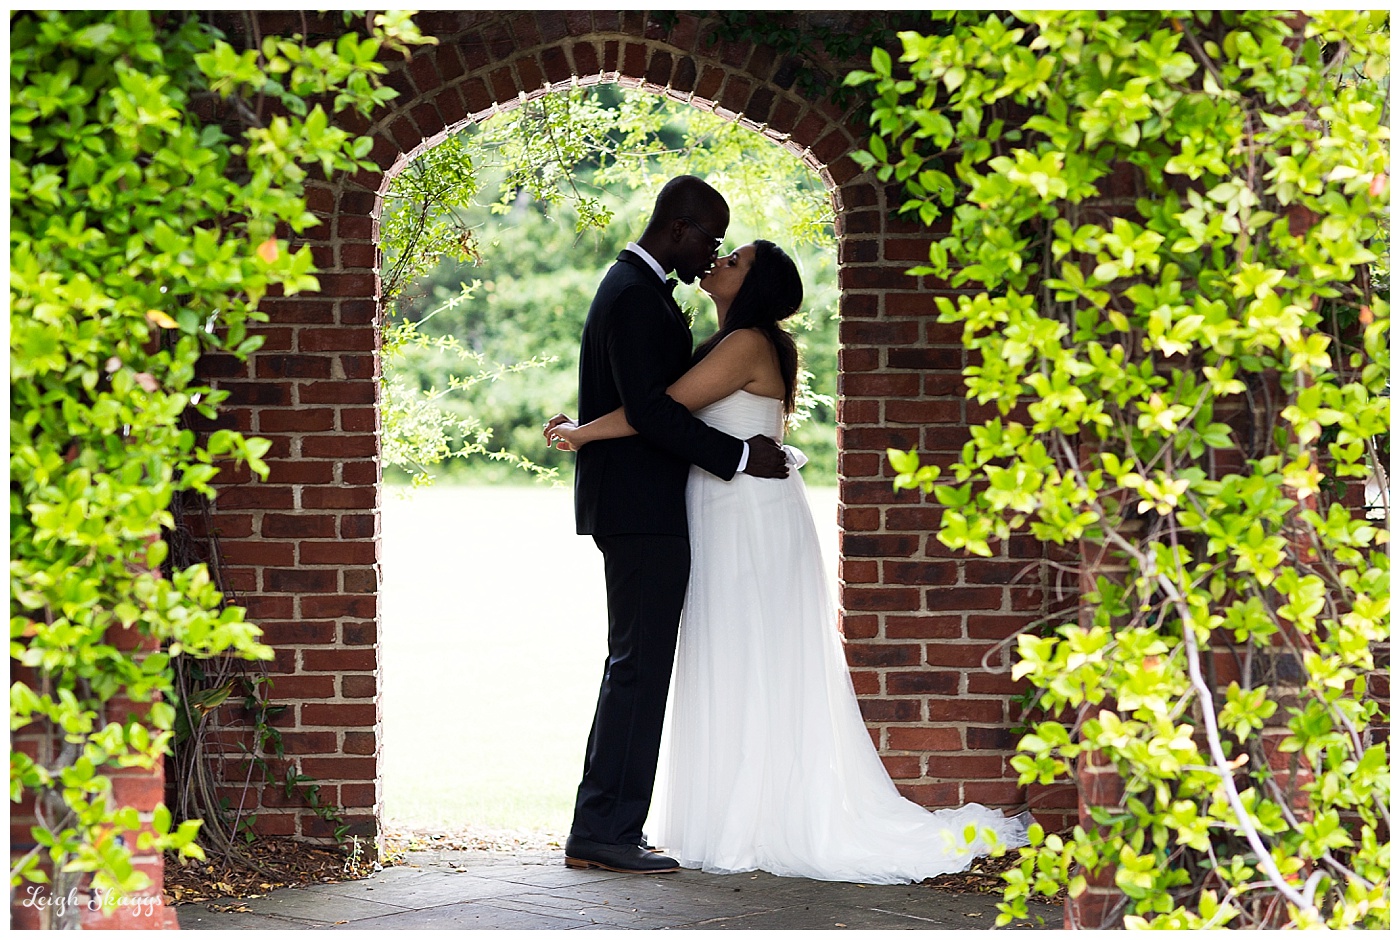 Alena & Luke are Married!  A Norfolk Virginia Hermitage Museum and Garden Wedding